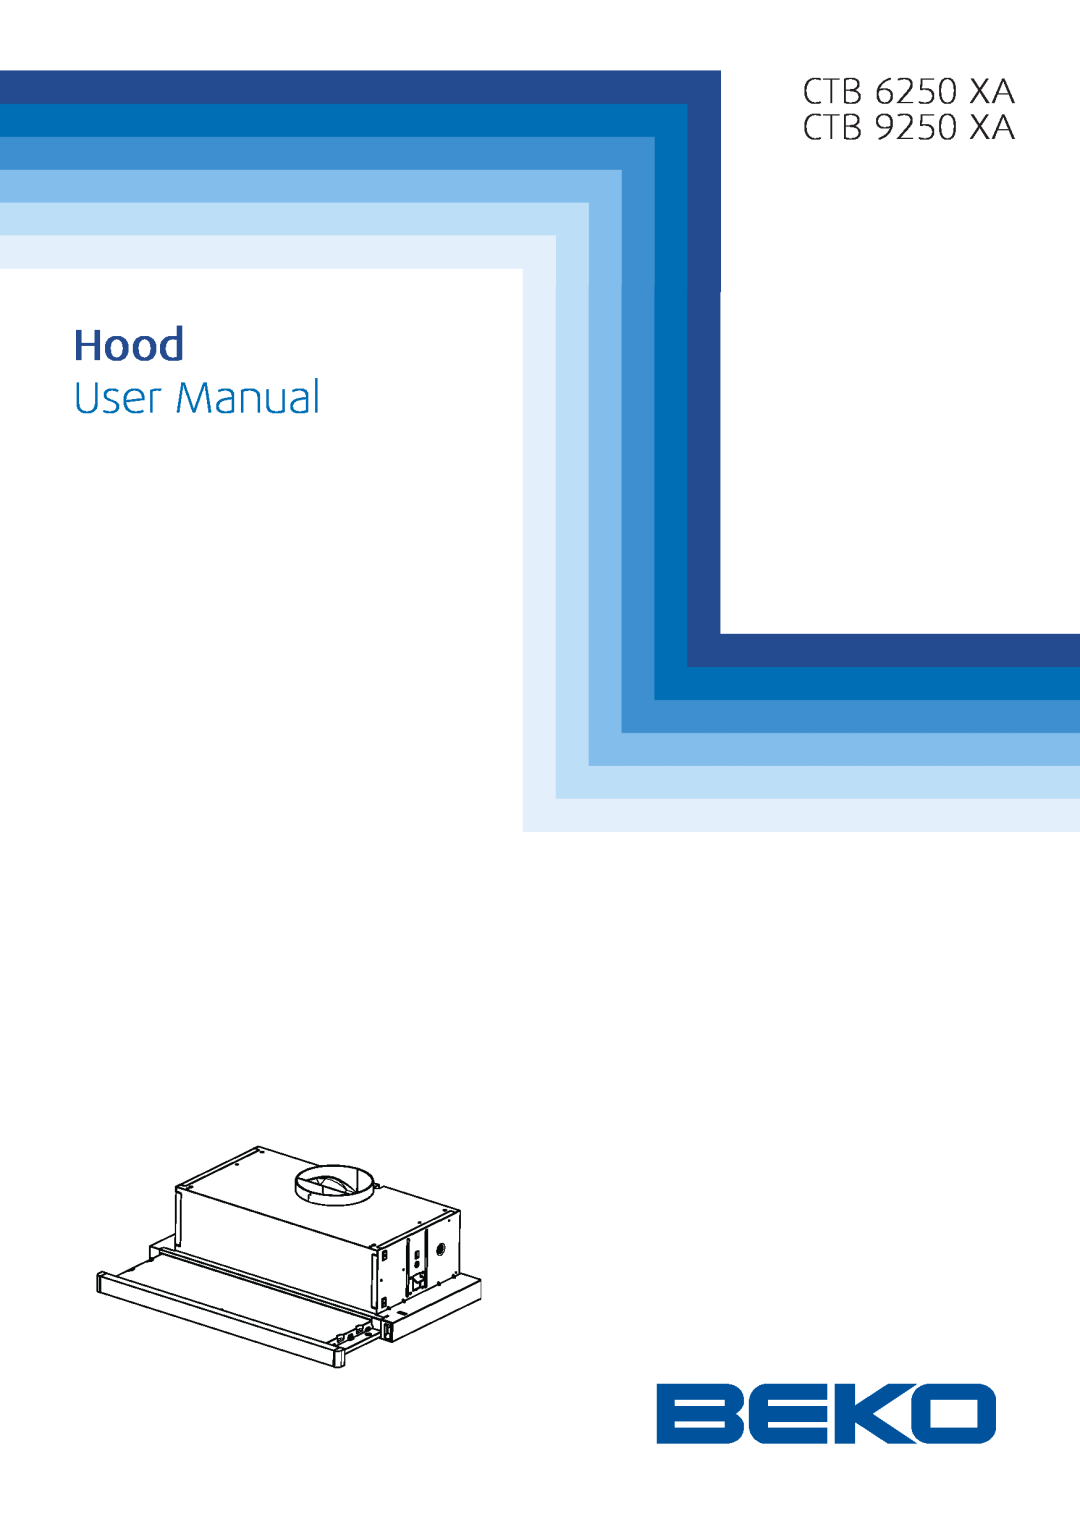 Beko user manual CTB 6250 XA CTB 9250 XA, Hood, User Manual 